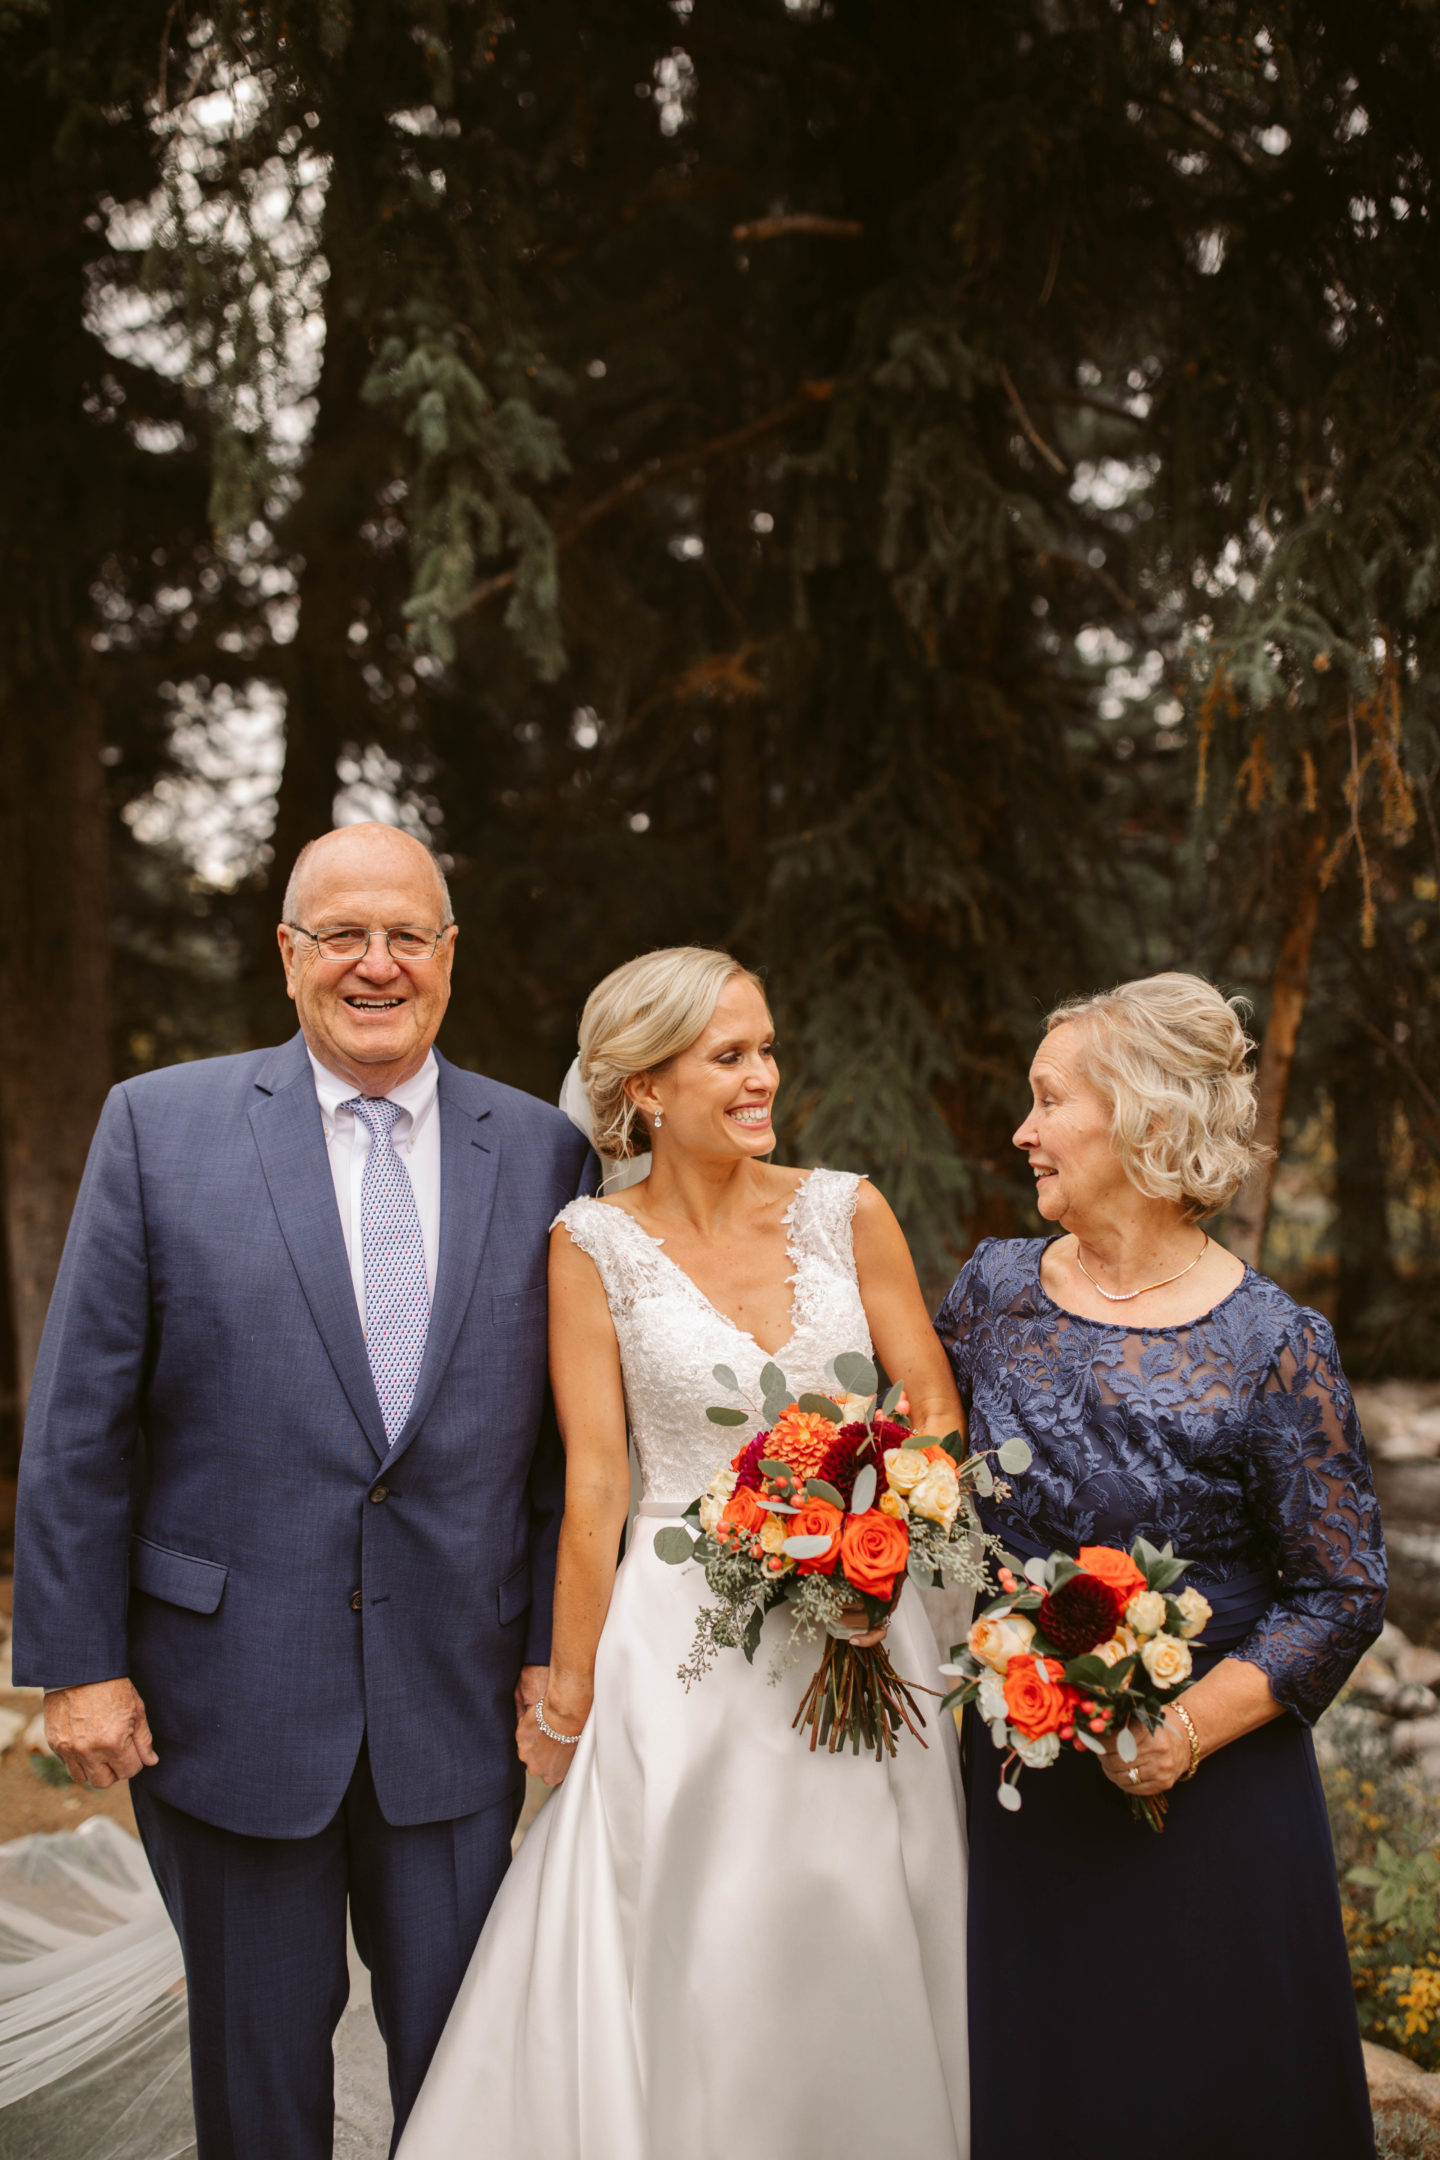 Vail Micro Wedding | Fall wedding in Colorado | COVID wedding | Vail, CO wedding